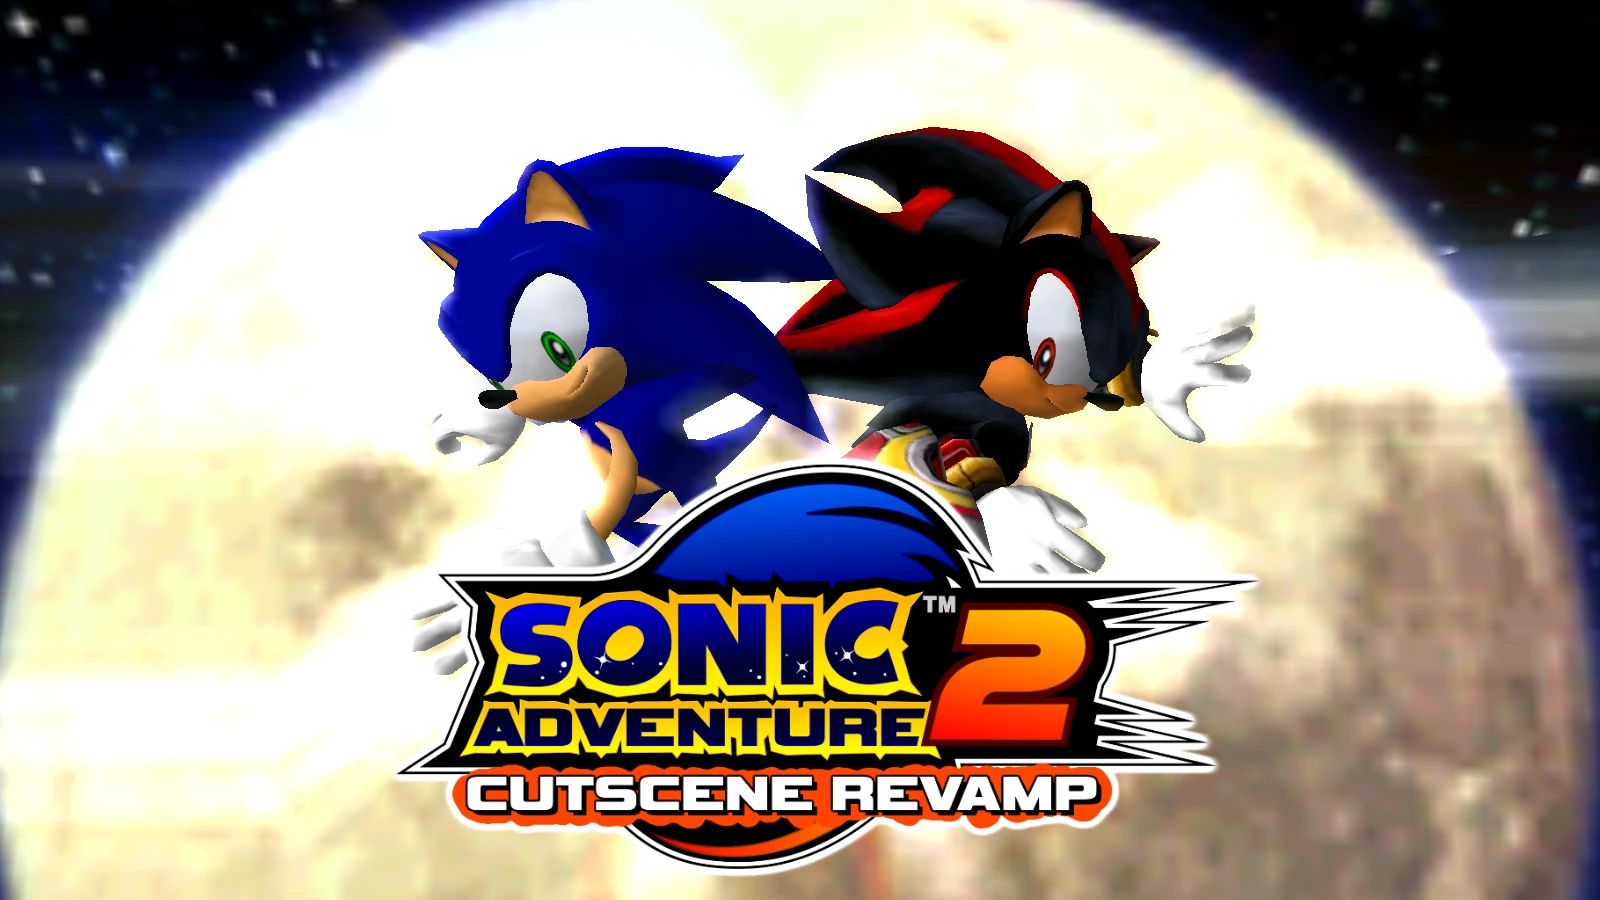 Cutscene Revamp Sonic Adventure 2 Mods - roblox cutscene editor going too fast